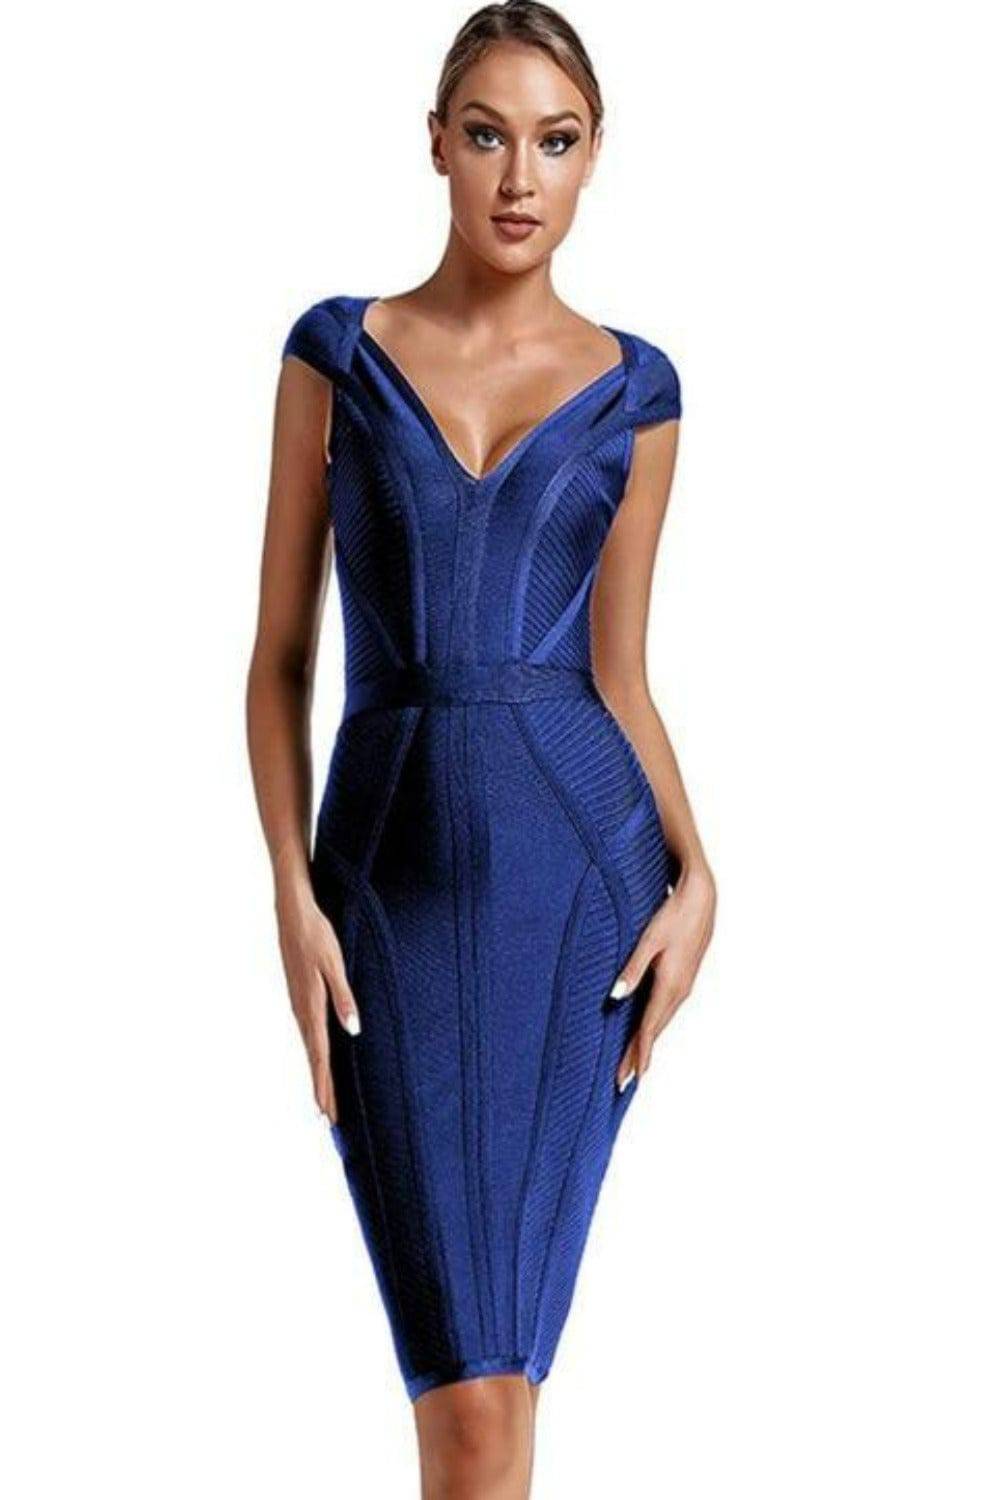 Loren Runway Elegant Short Sleeve Striped Bandage Dress - Royal Blue - TGC Boutique - Bodycon Dress